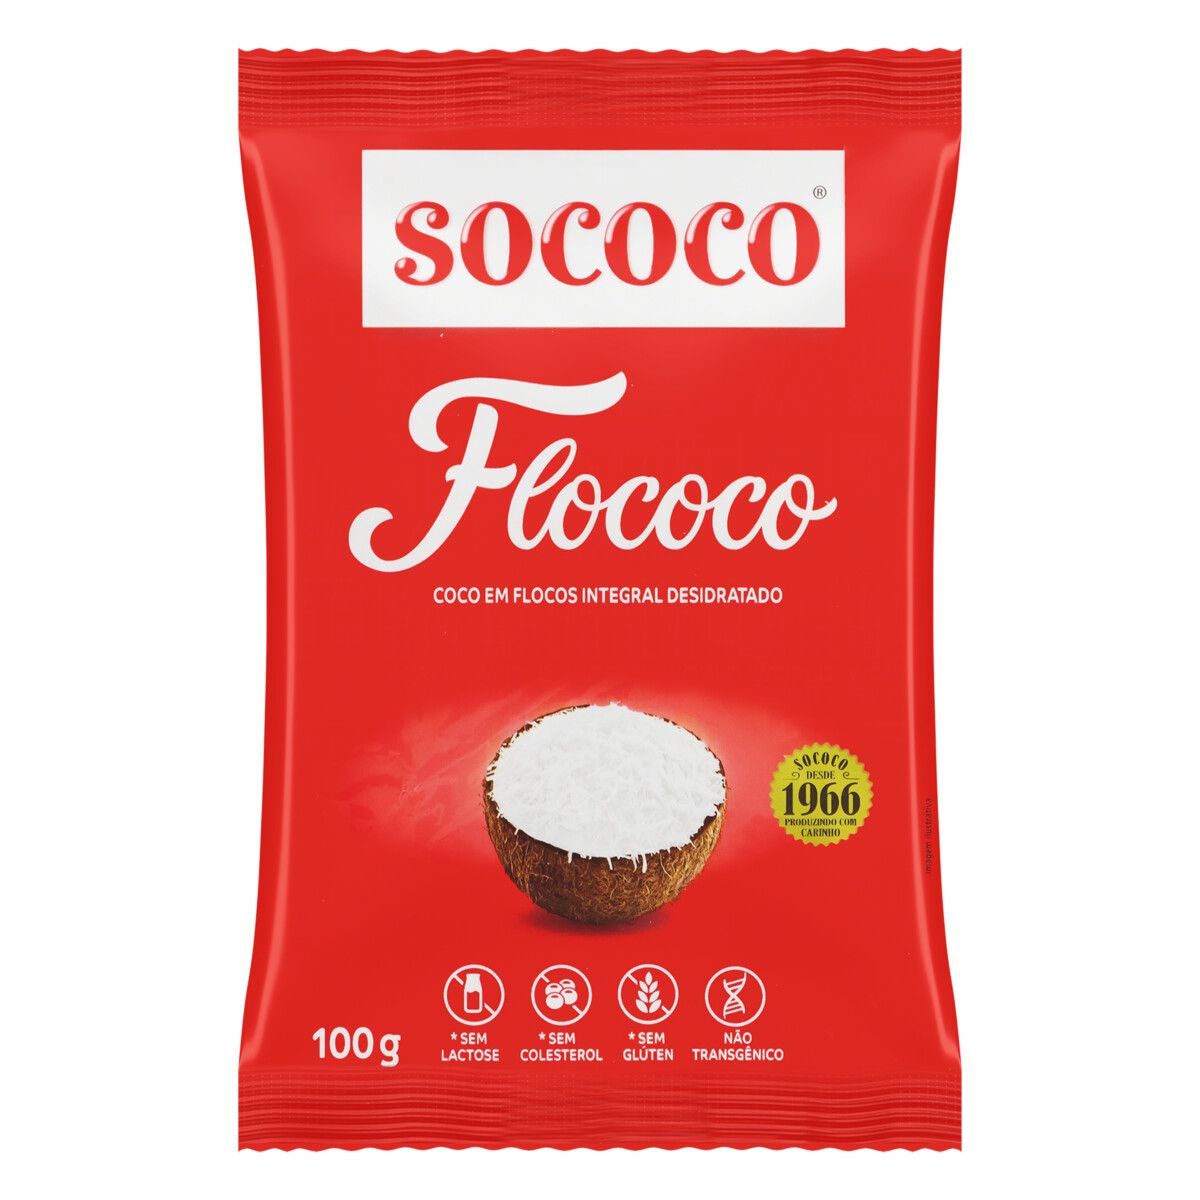 Coco Ralado Sococo Desidratado em Flocos Flococo 100g